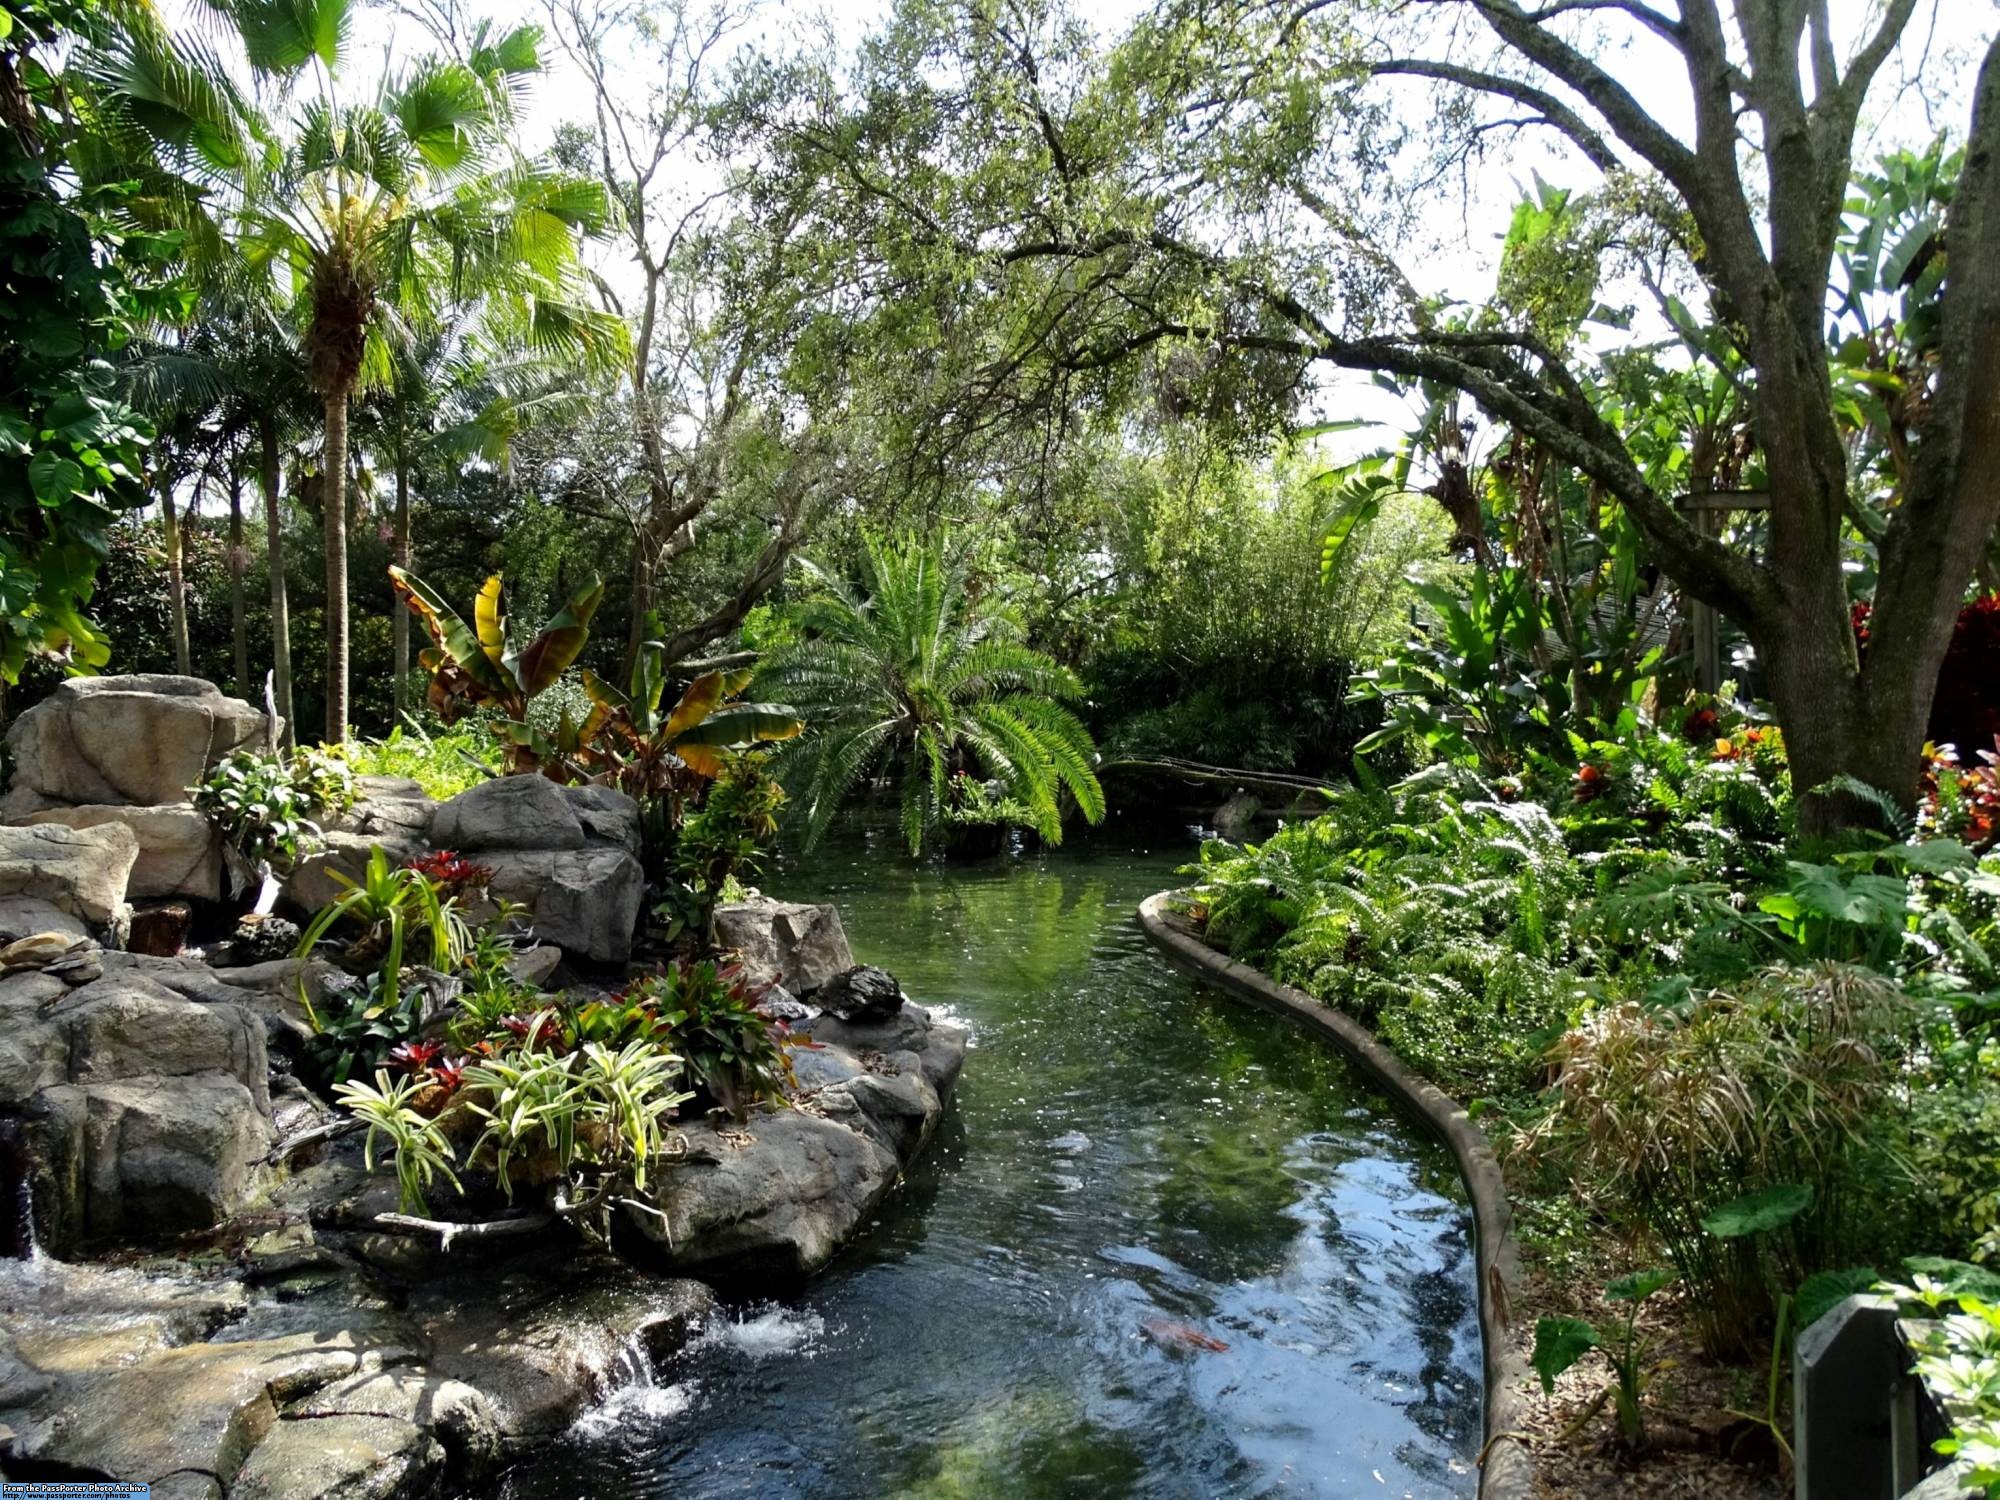 Take a walk on the wild side at Busch Gardens Tampa | PassPorter.com